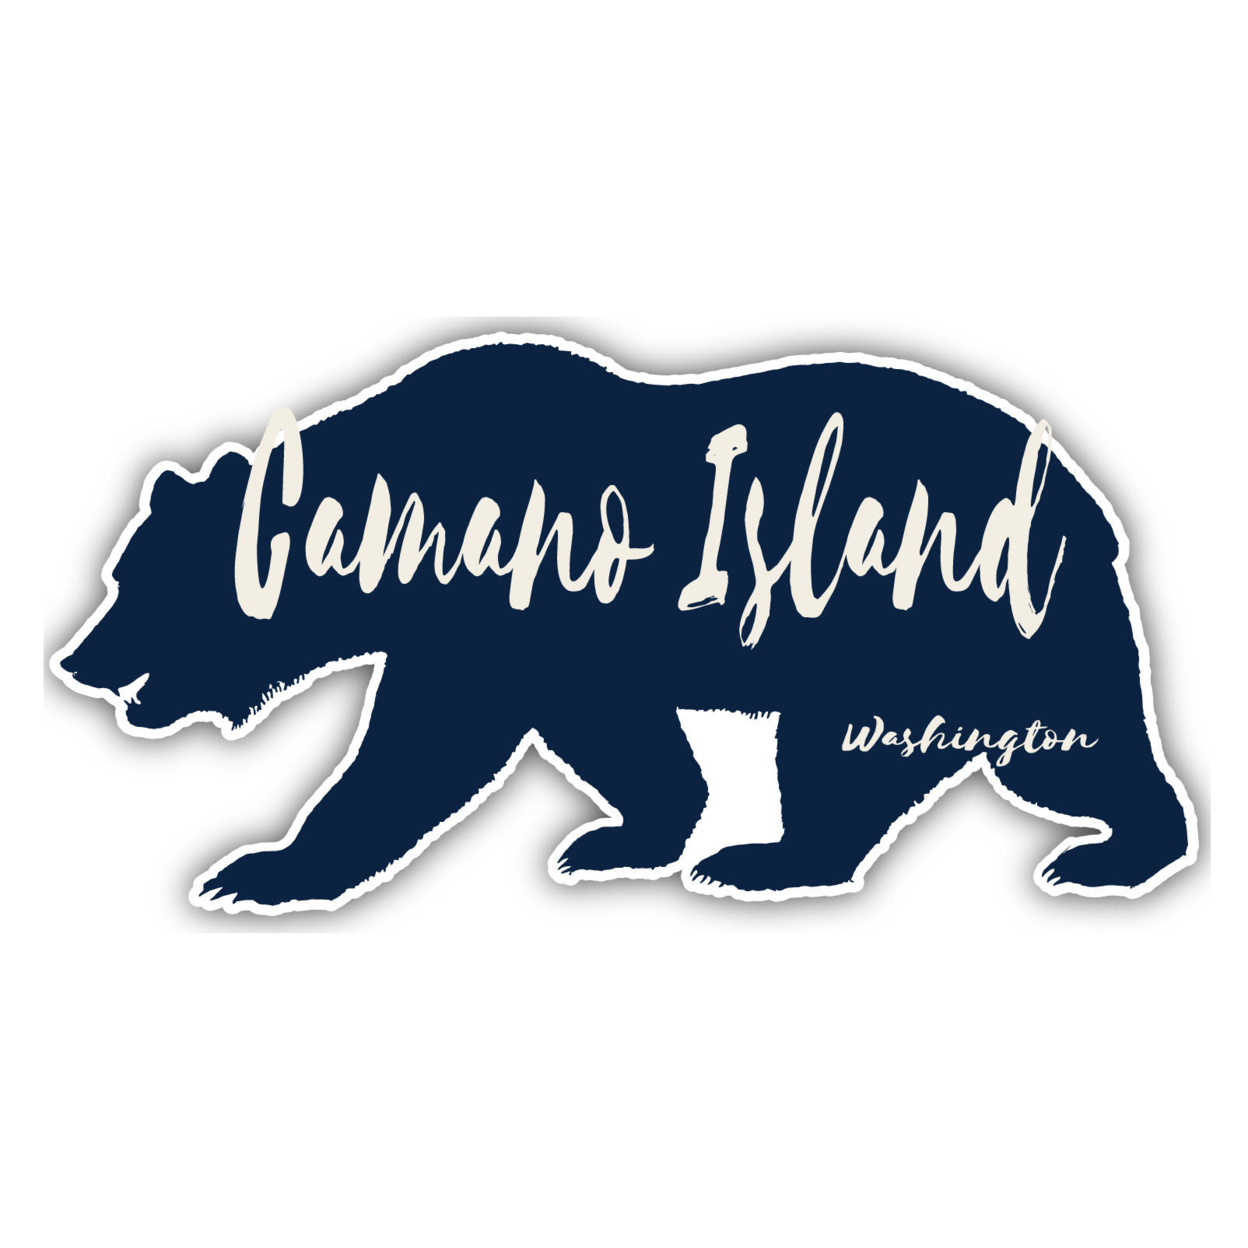 Camano Island Washington Souvenir Decorative Stickers (Choose Theme And Size) - Single Unit, 4-Inch, Adventures Awaits